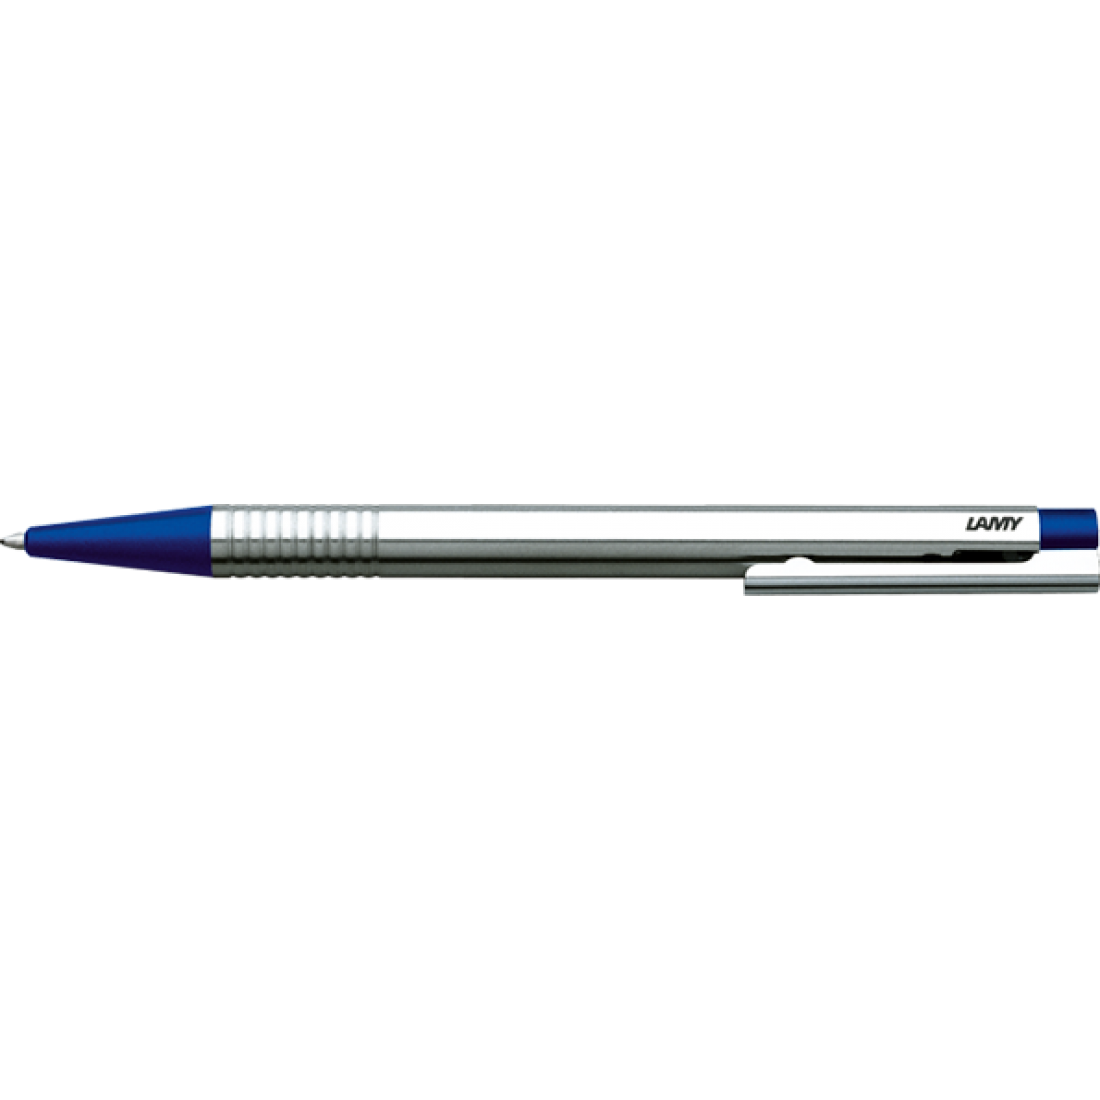 Www pen ru. Механический карандаш Lamy. Механический карандаш 854995. 3245675990592 Механический карандаш. Механический карандаш Lamy Scribe.